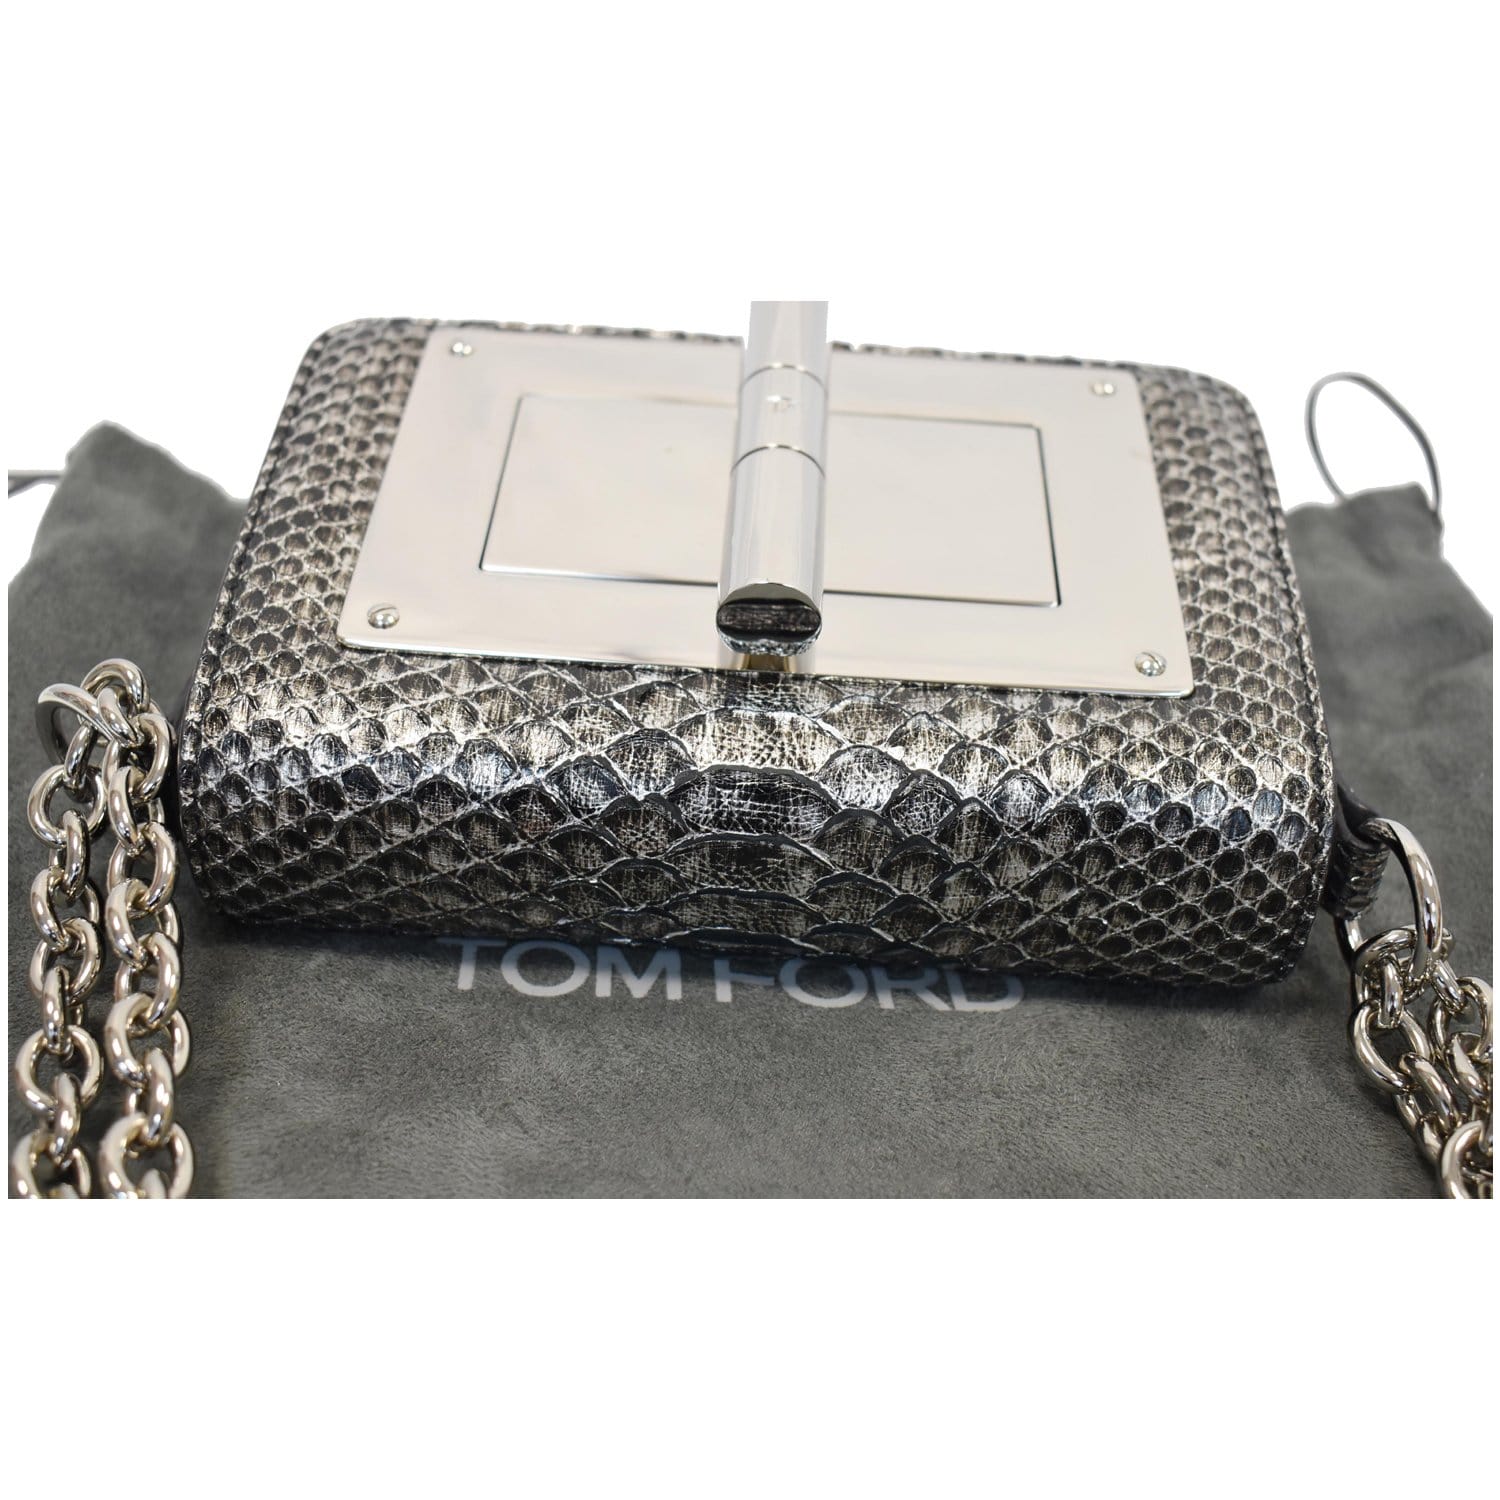 Tom Ford Natalia Medium Chain Turnlock Shoulder Bag